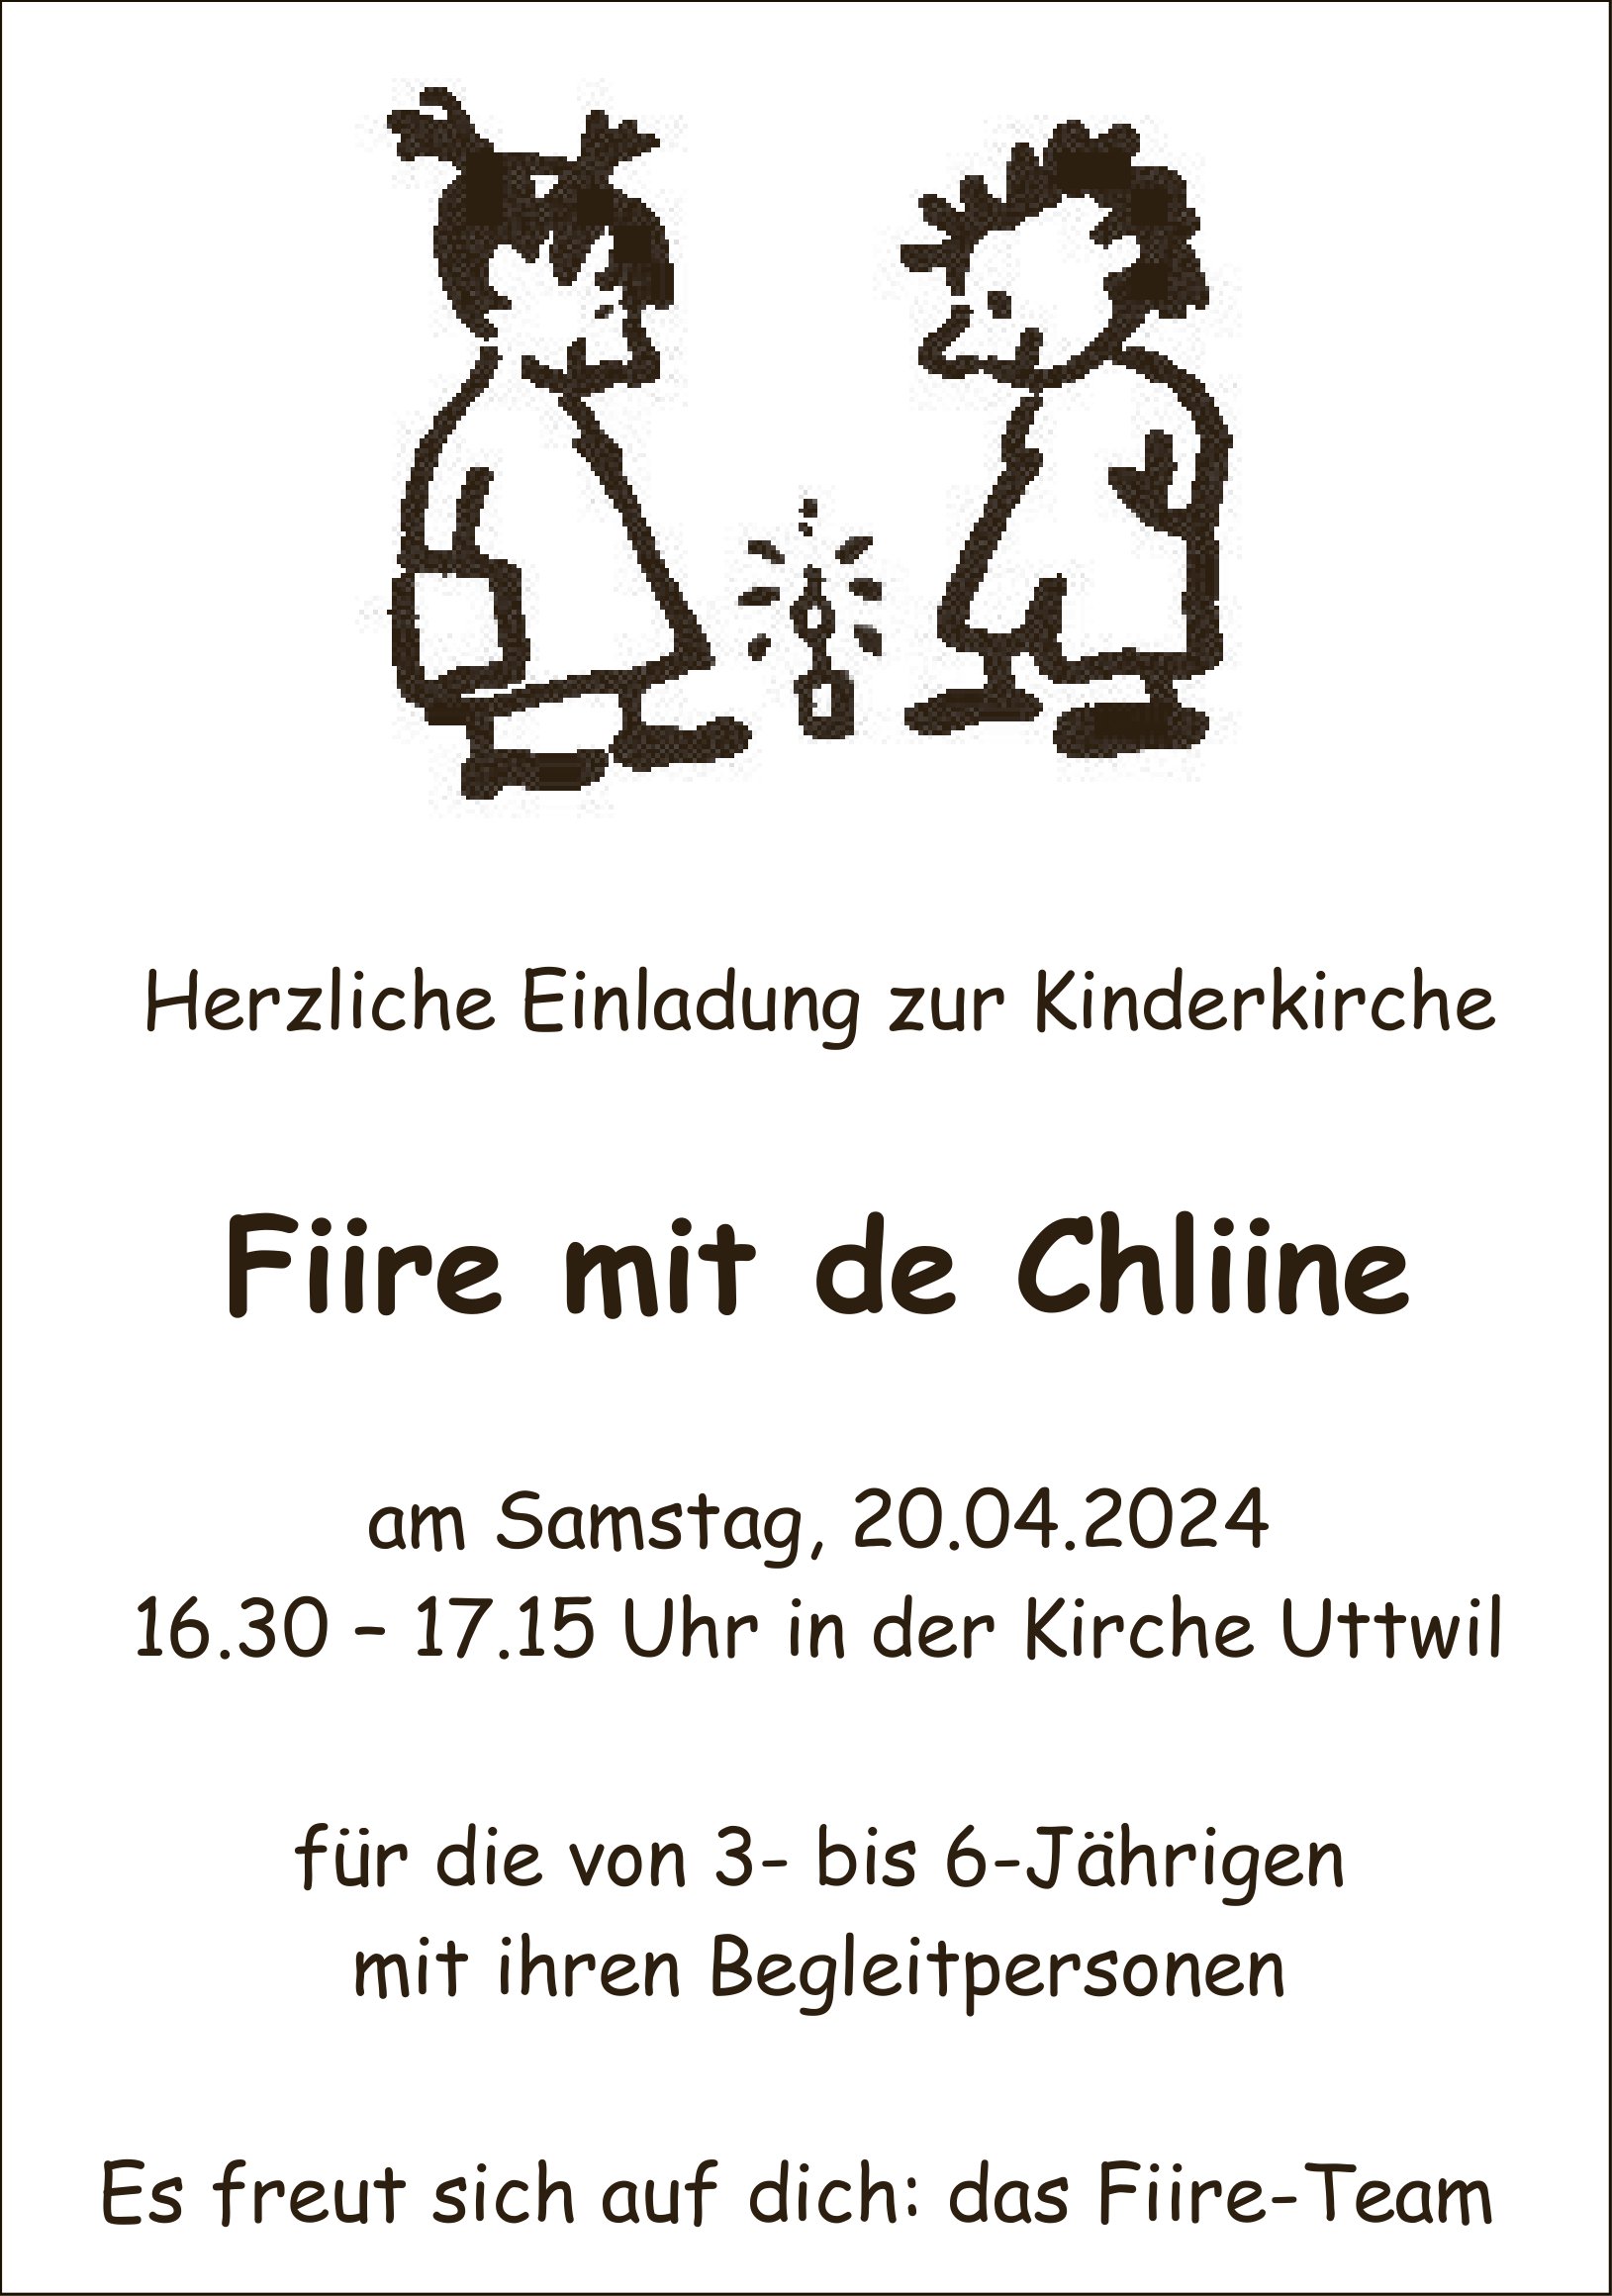 Kinderkirche Fiire mit de Chliine, 20. April, Uttwil